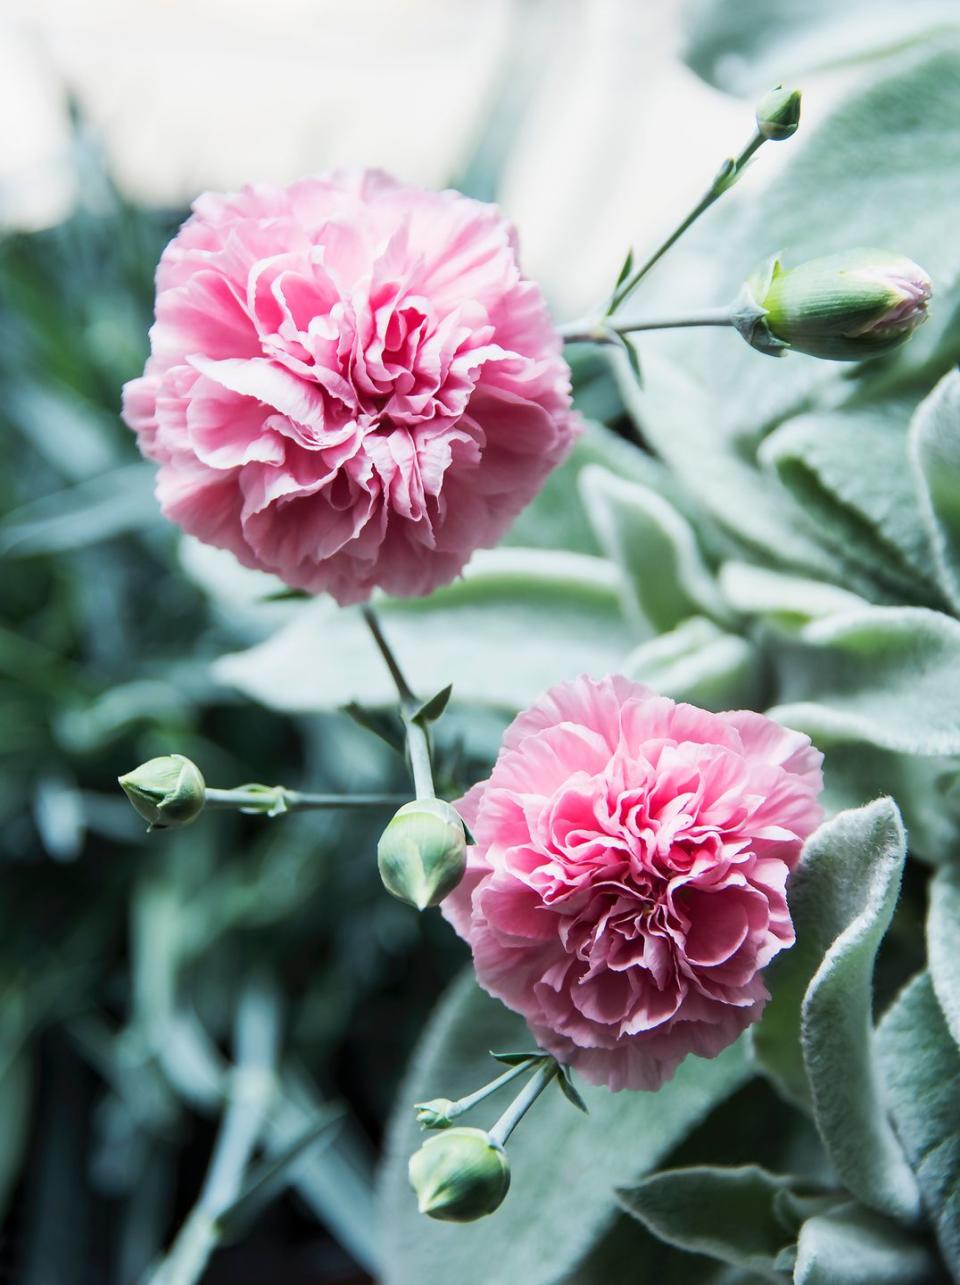 3) Carnations